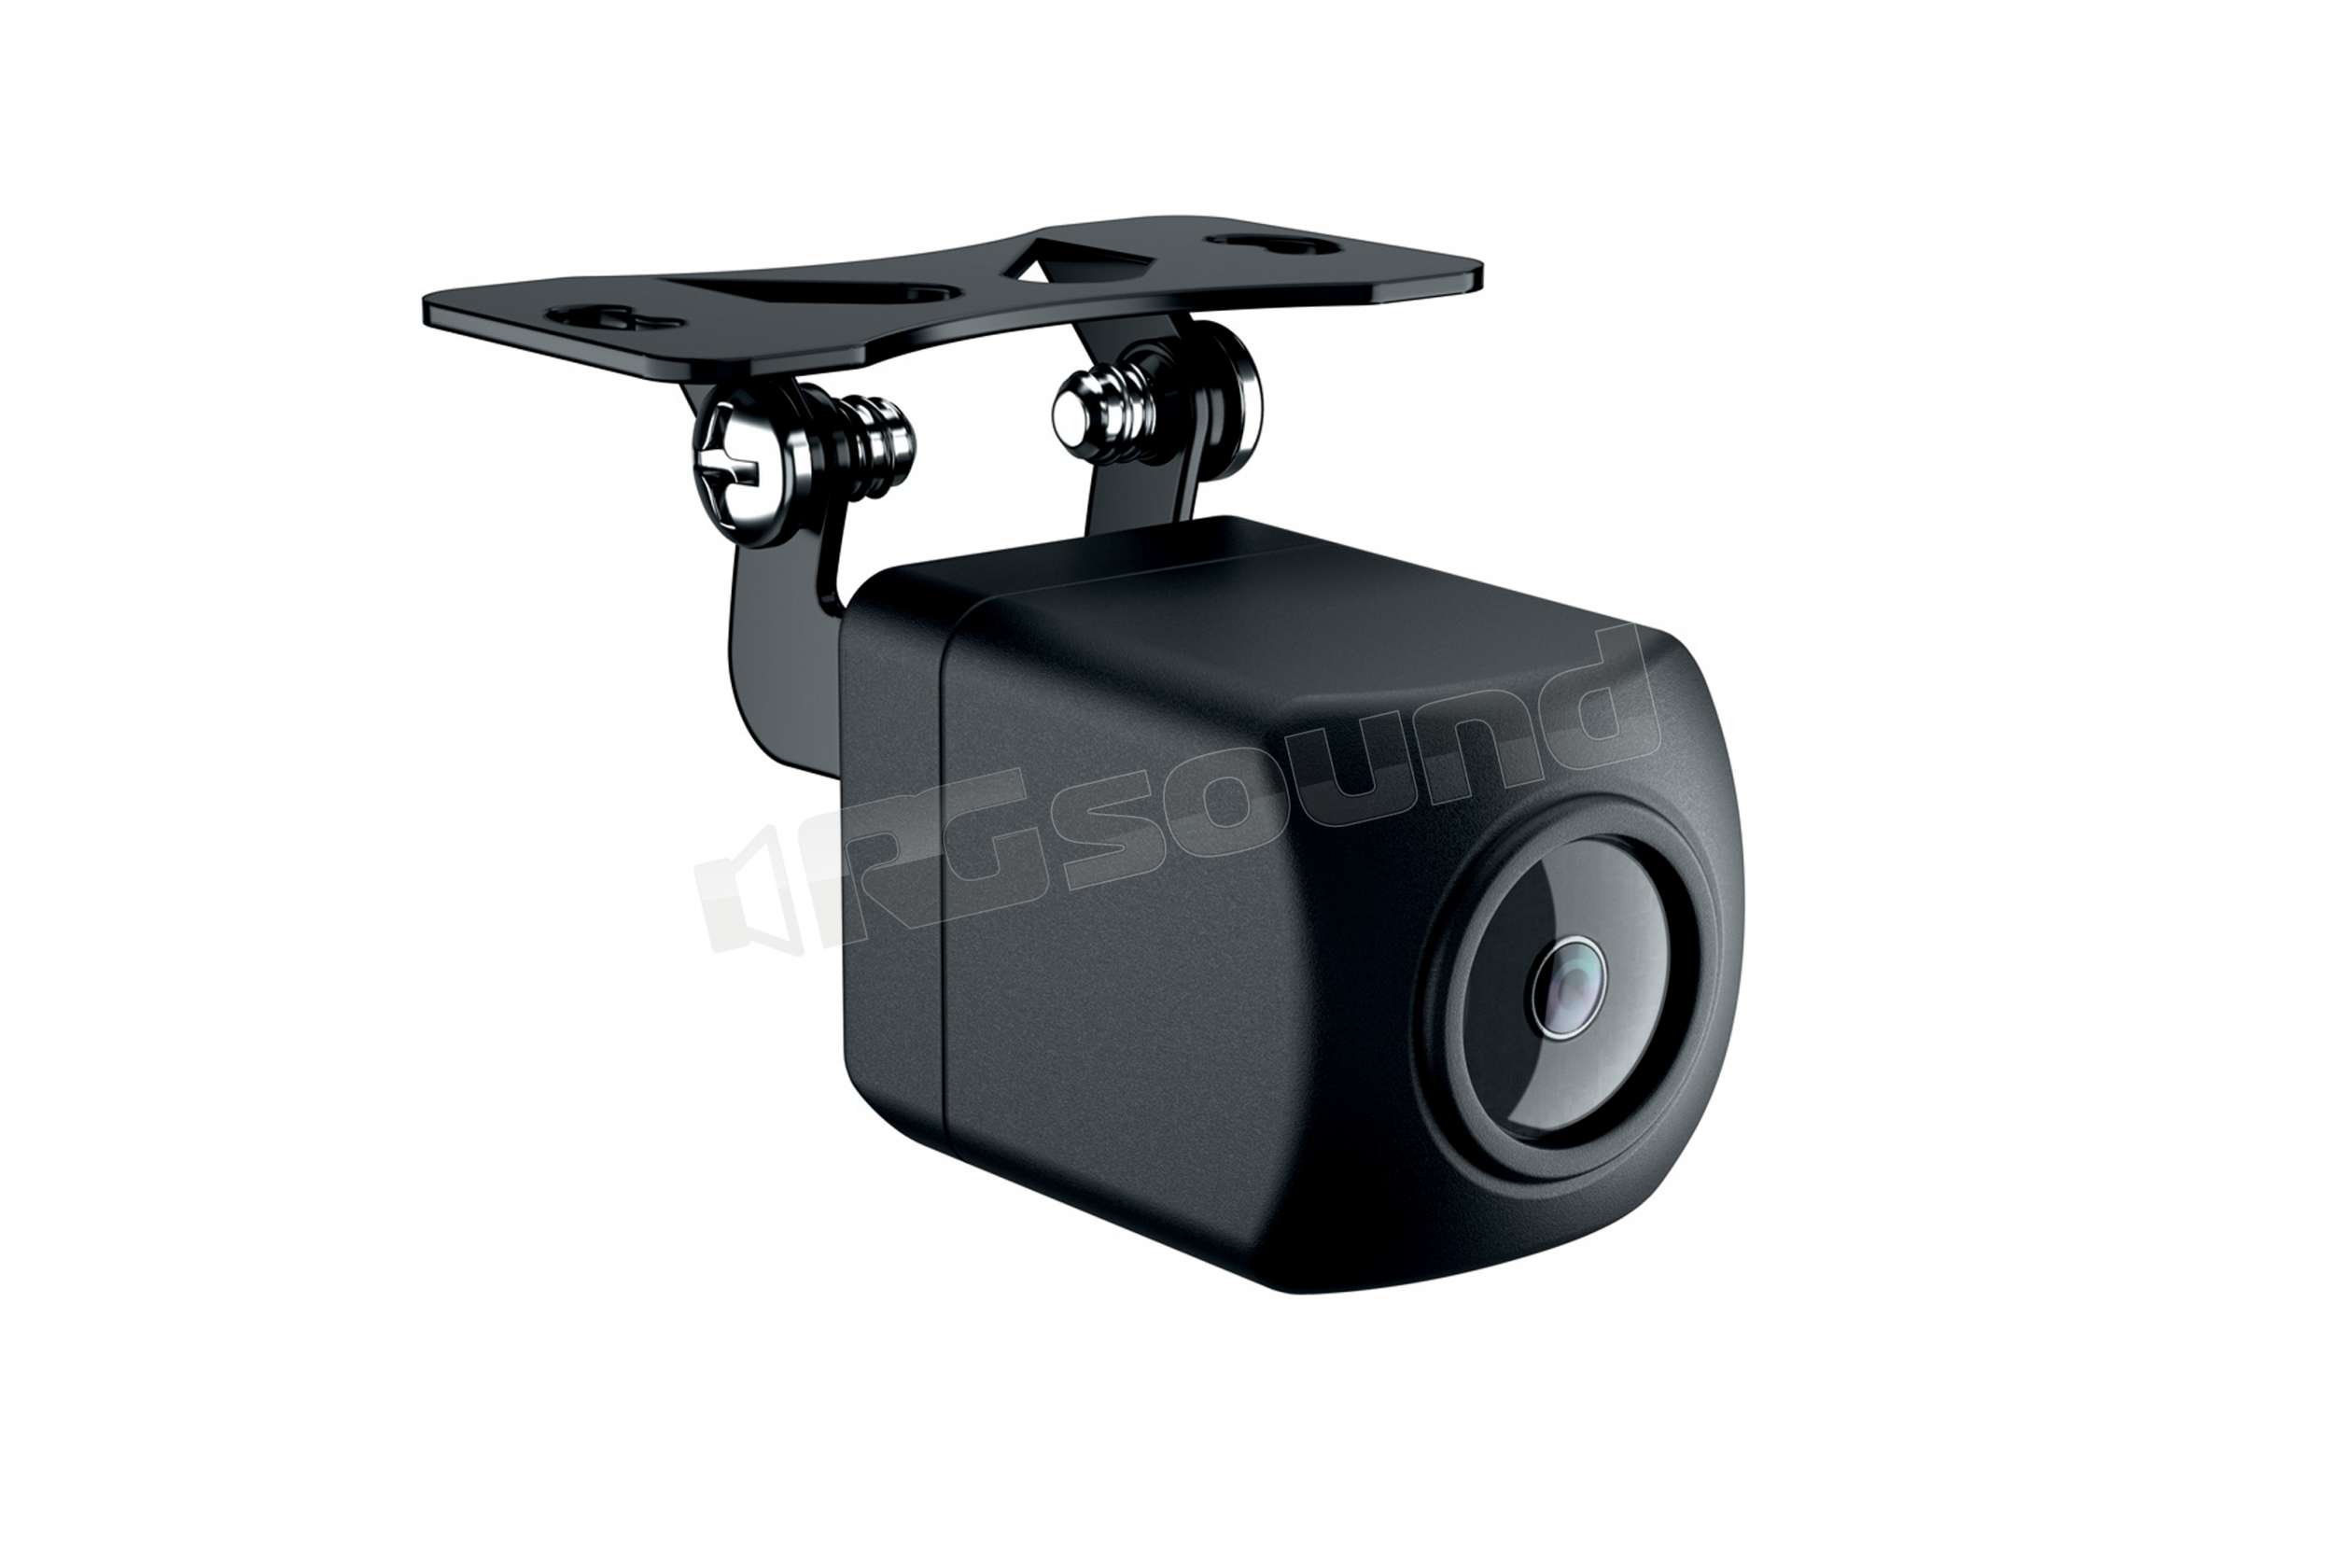 Hertz HM CAM W01 telecamera posteriore wireless waterproof per auto, c